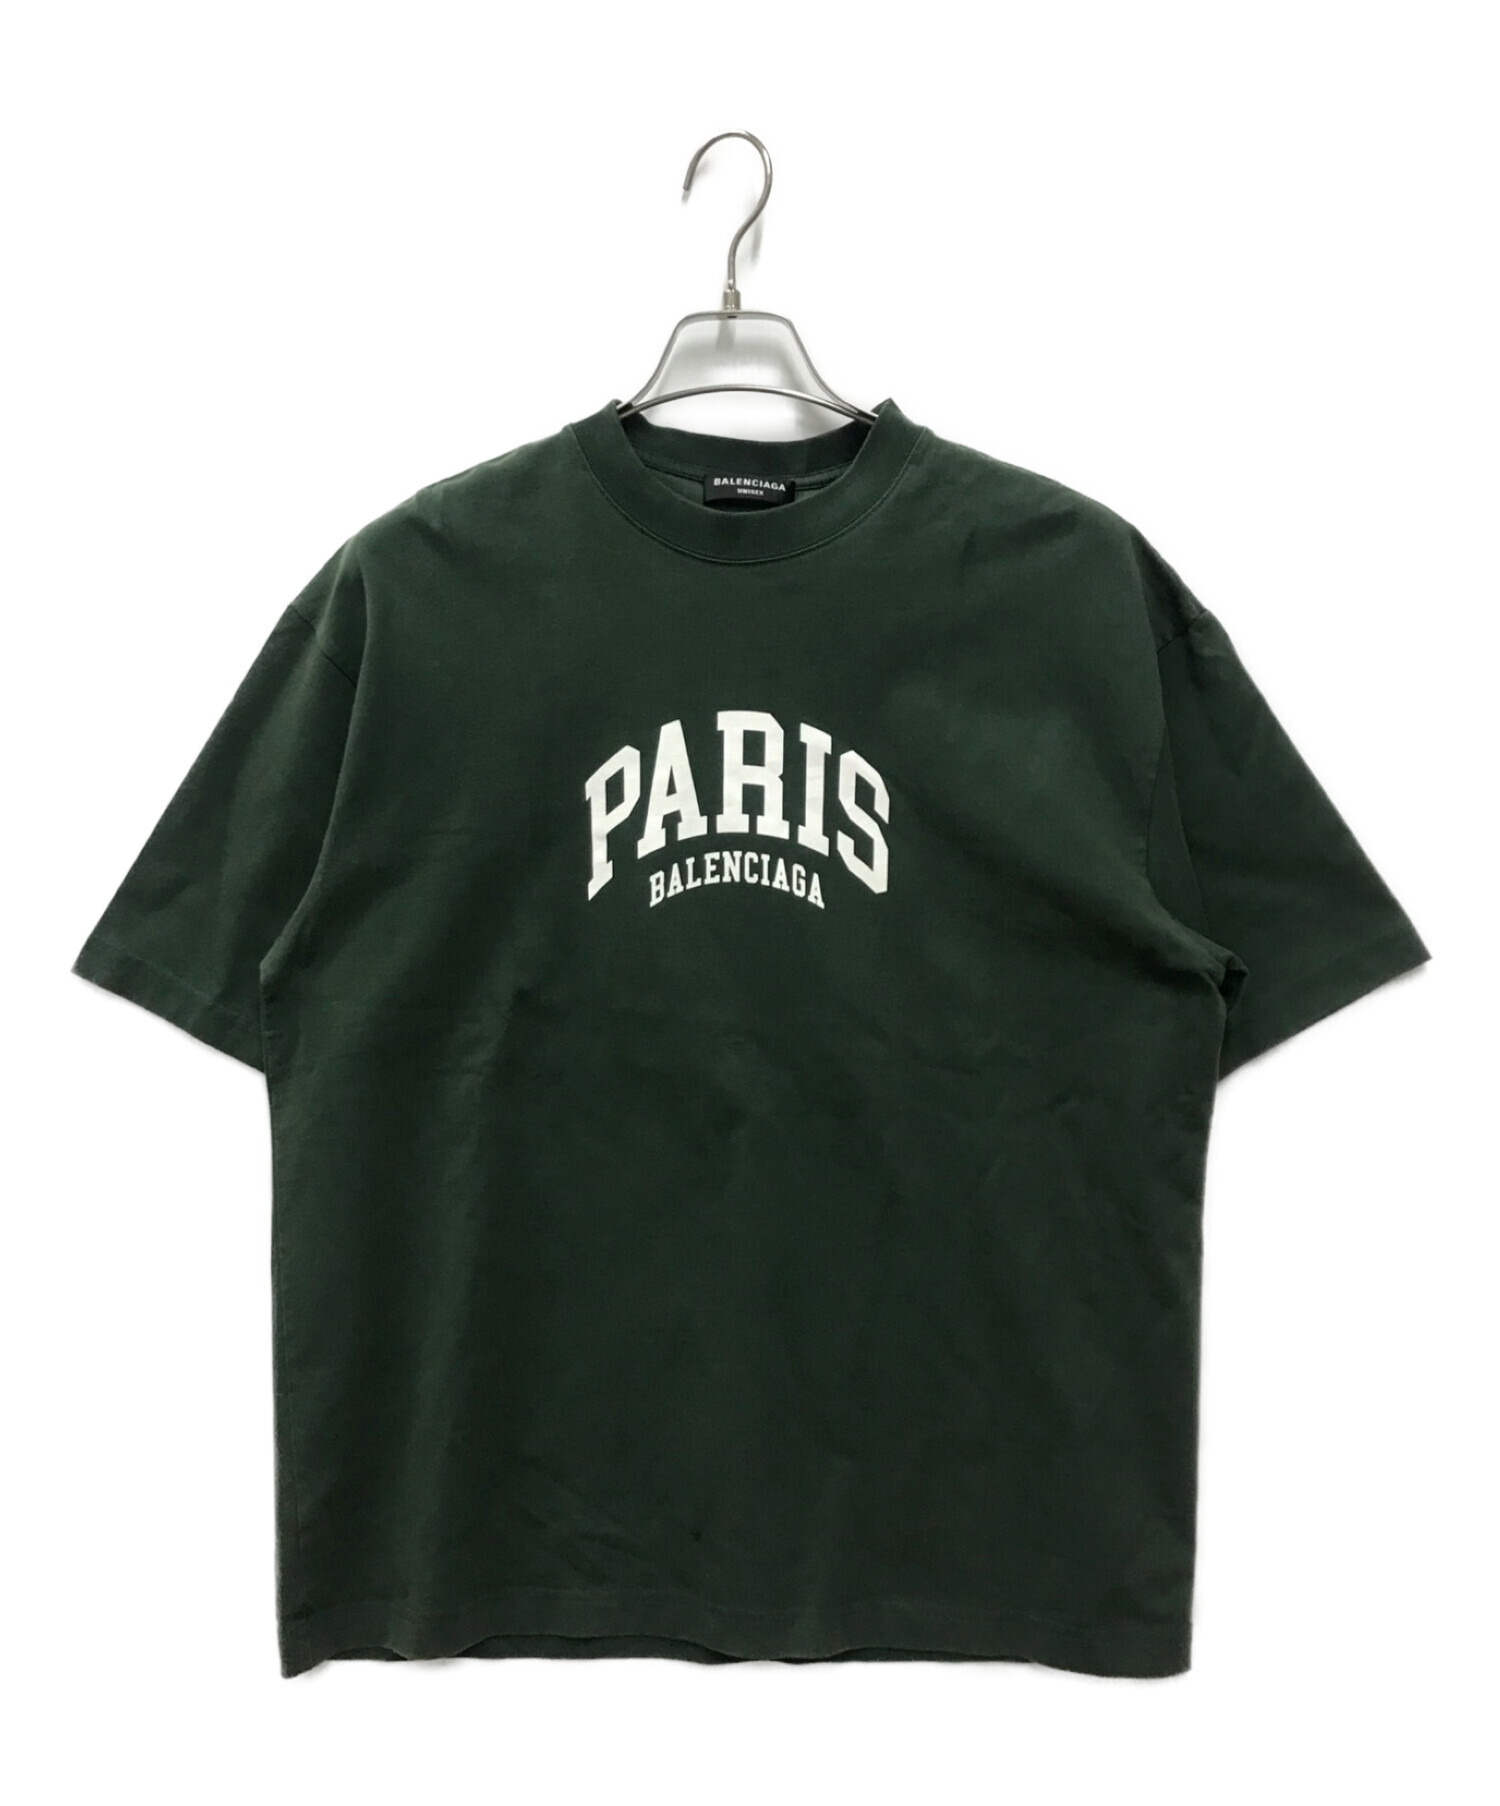 BALENCIAGA (バレンシアガ) Cities Paris Tシャツ オリーブ サイズ:XS